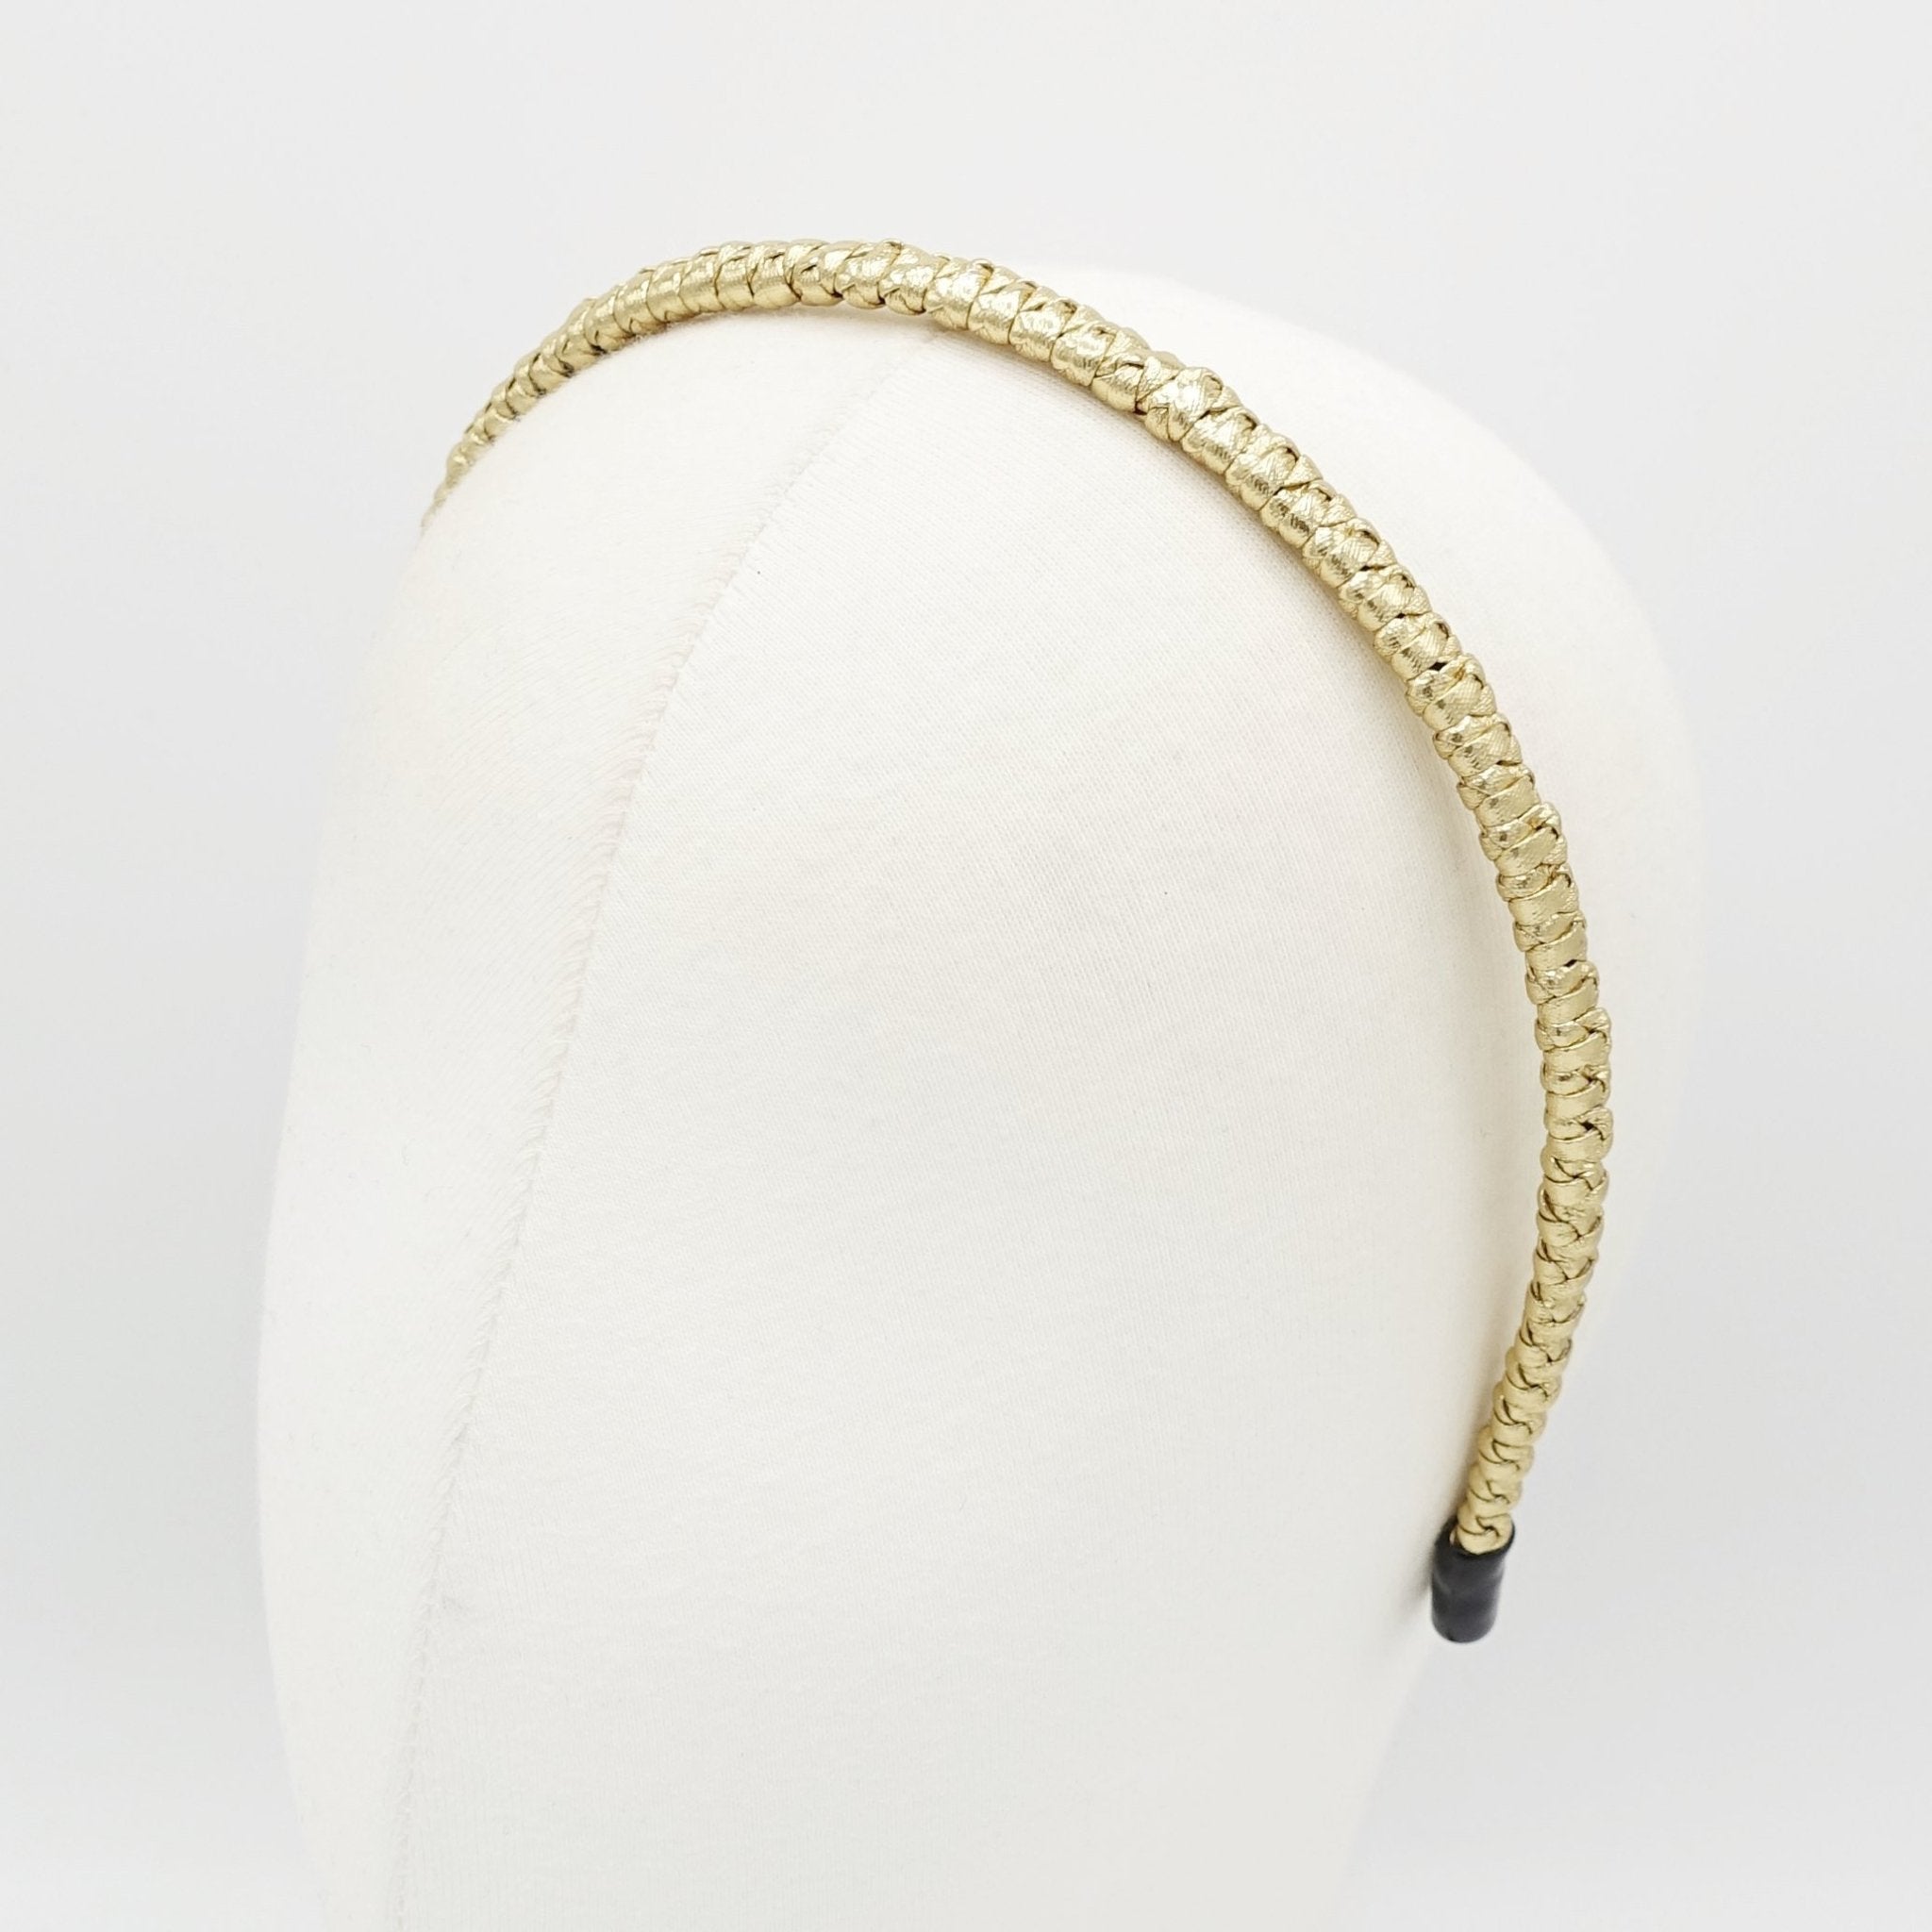 VeryShine metallic faux leather braided headband thin wrap hairband simple women hair accessory